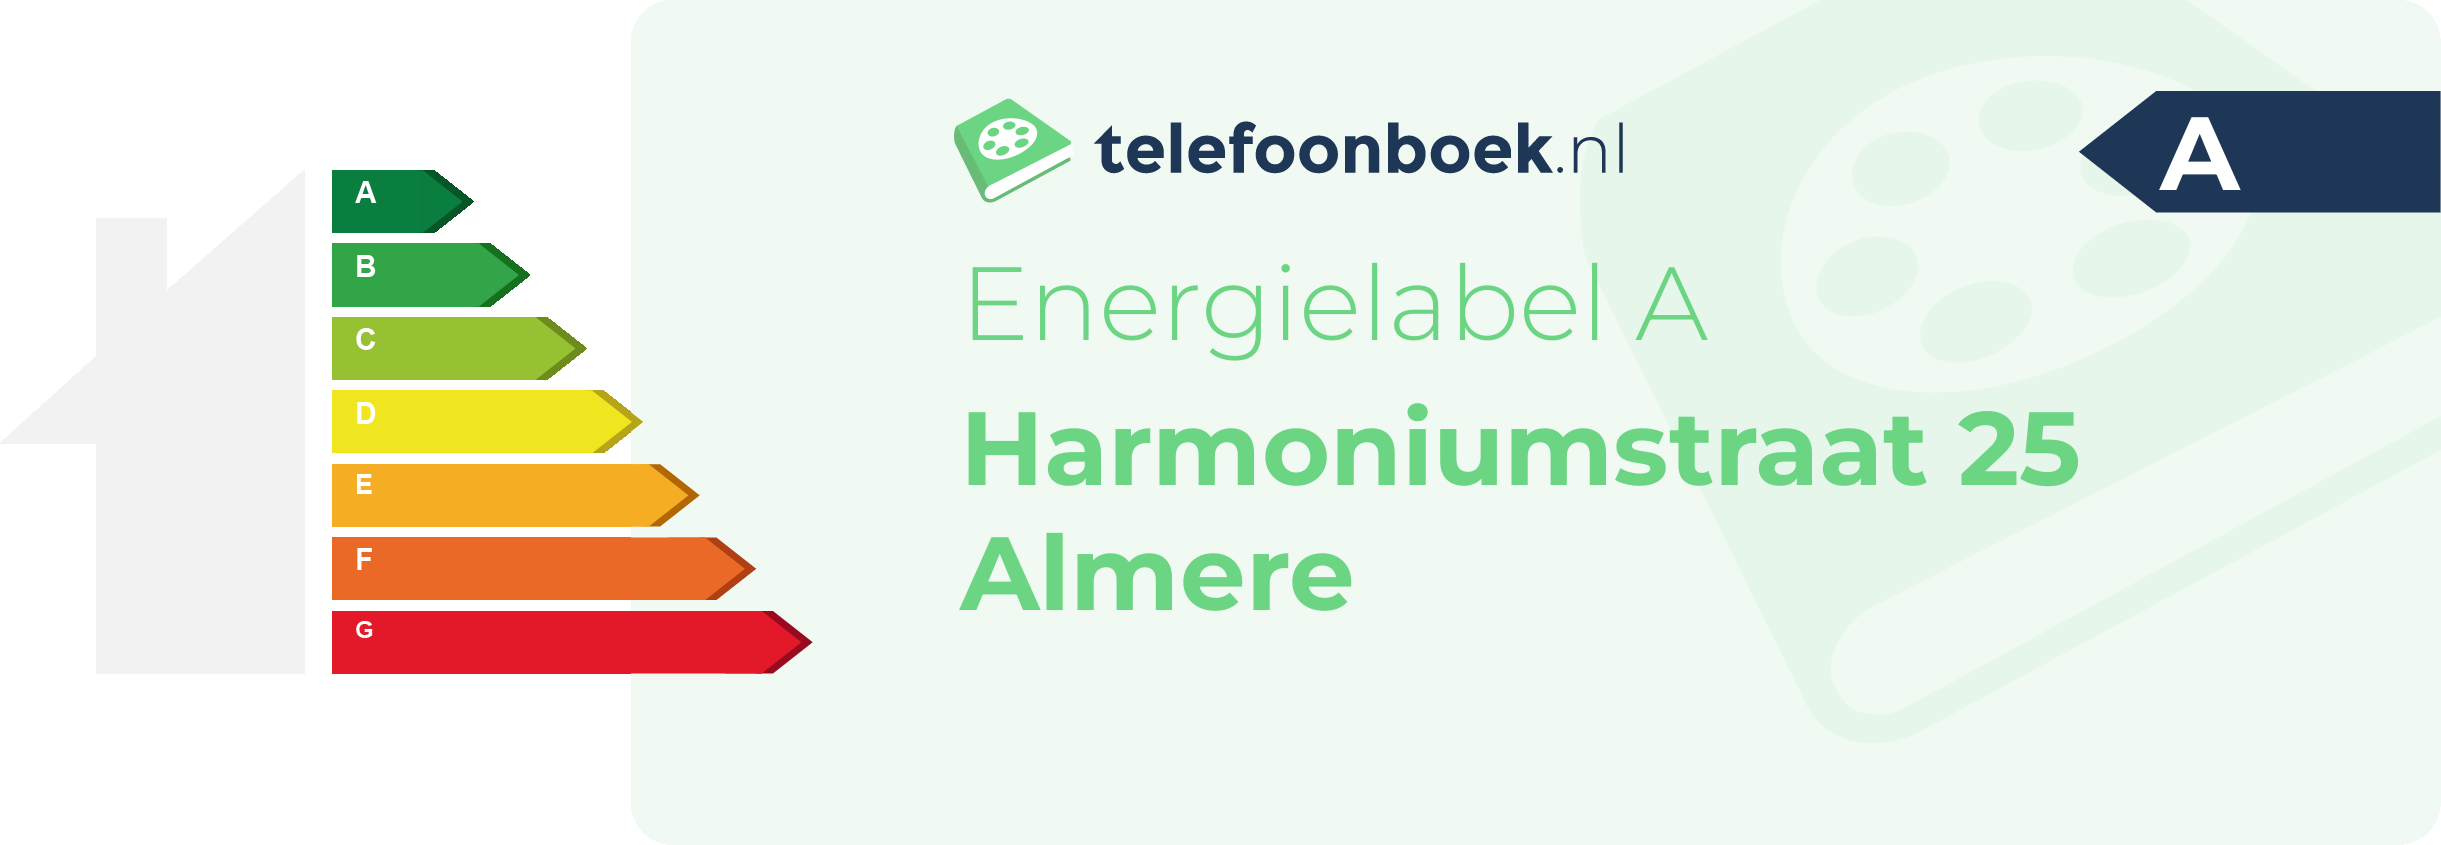 Energielabel Harmoniumstraat 25 Almere